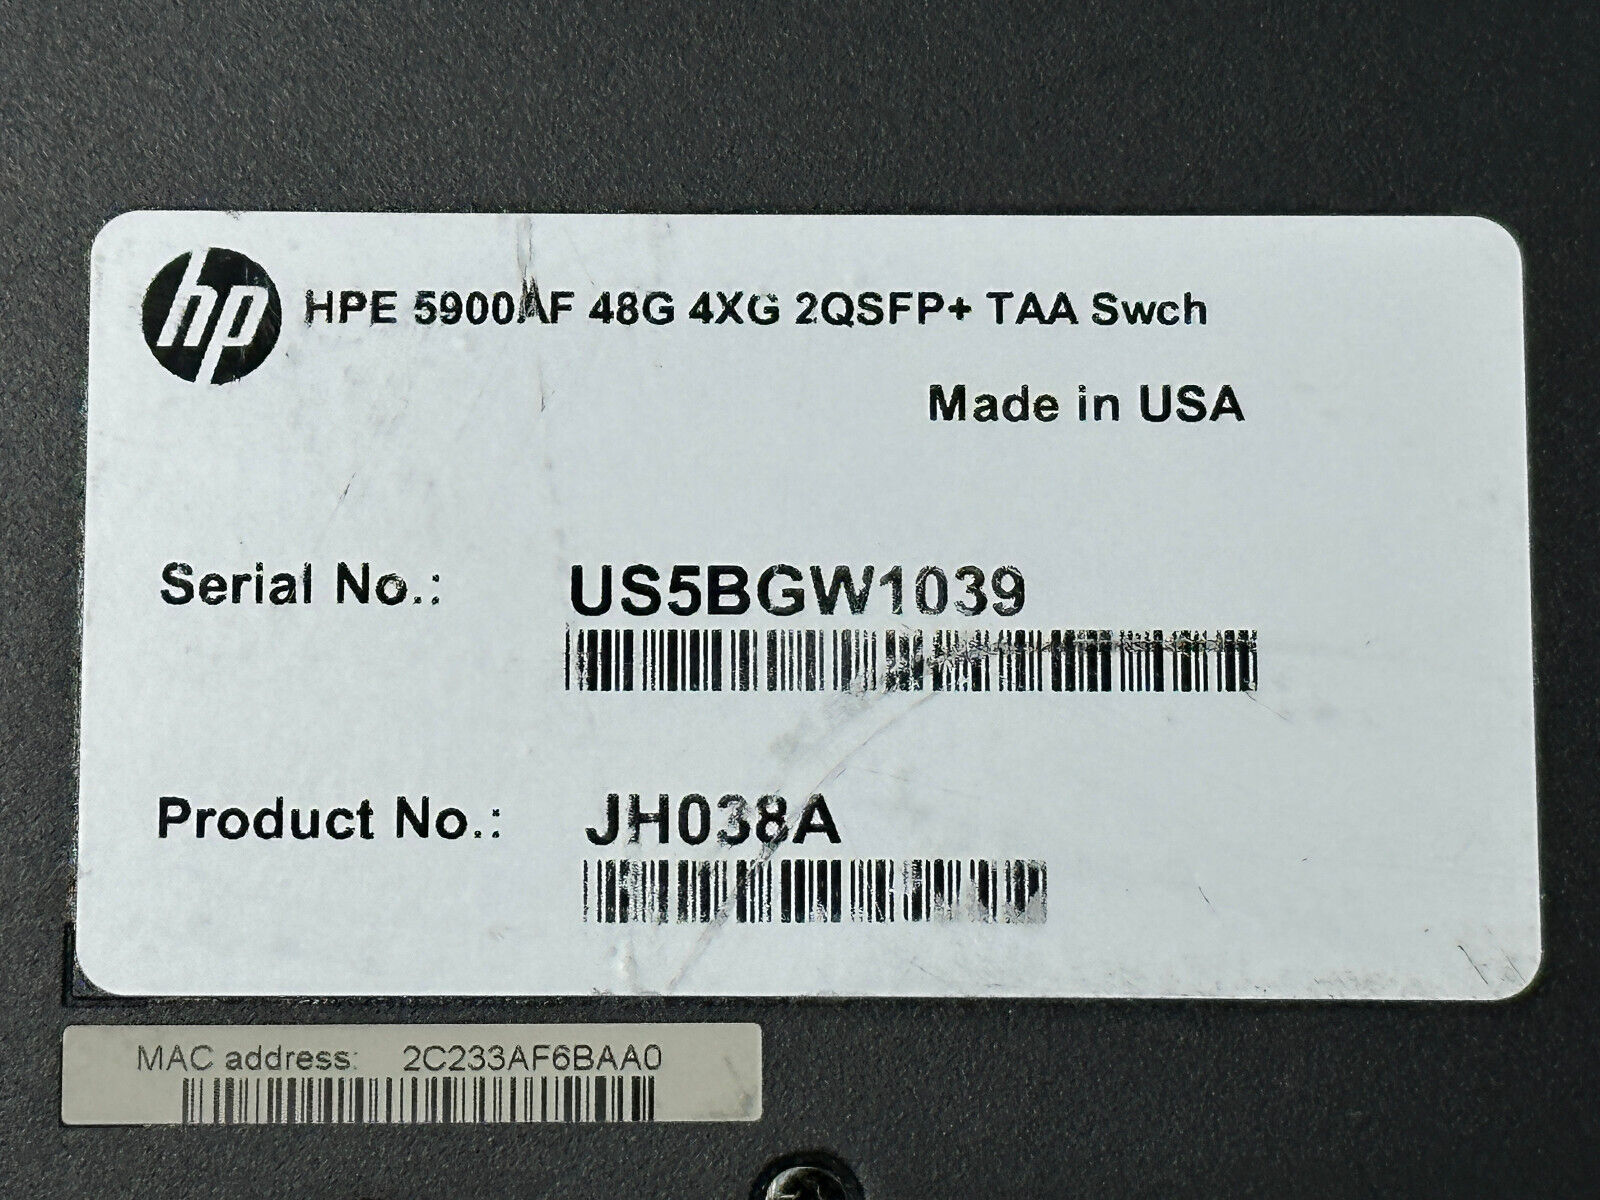 HPE JH038A FlexFabric 5900AF 48G 4XG 2QSFP+ L3 Switch 1x PSU 2x Back to Front Fan Kit.